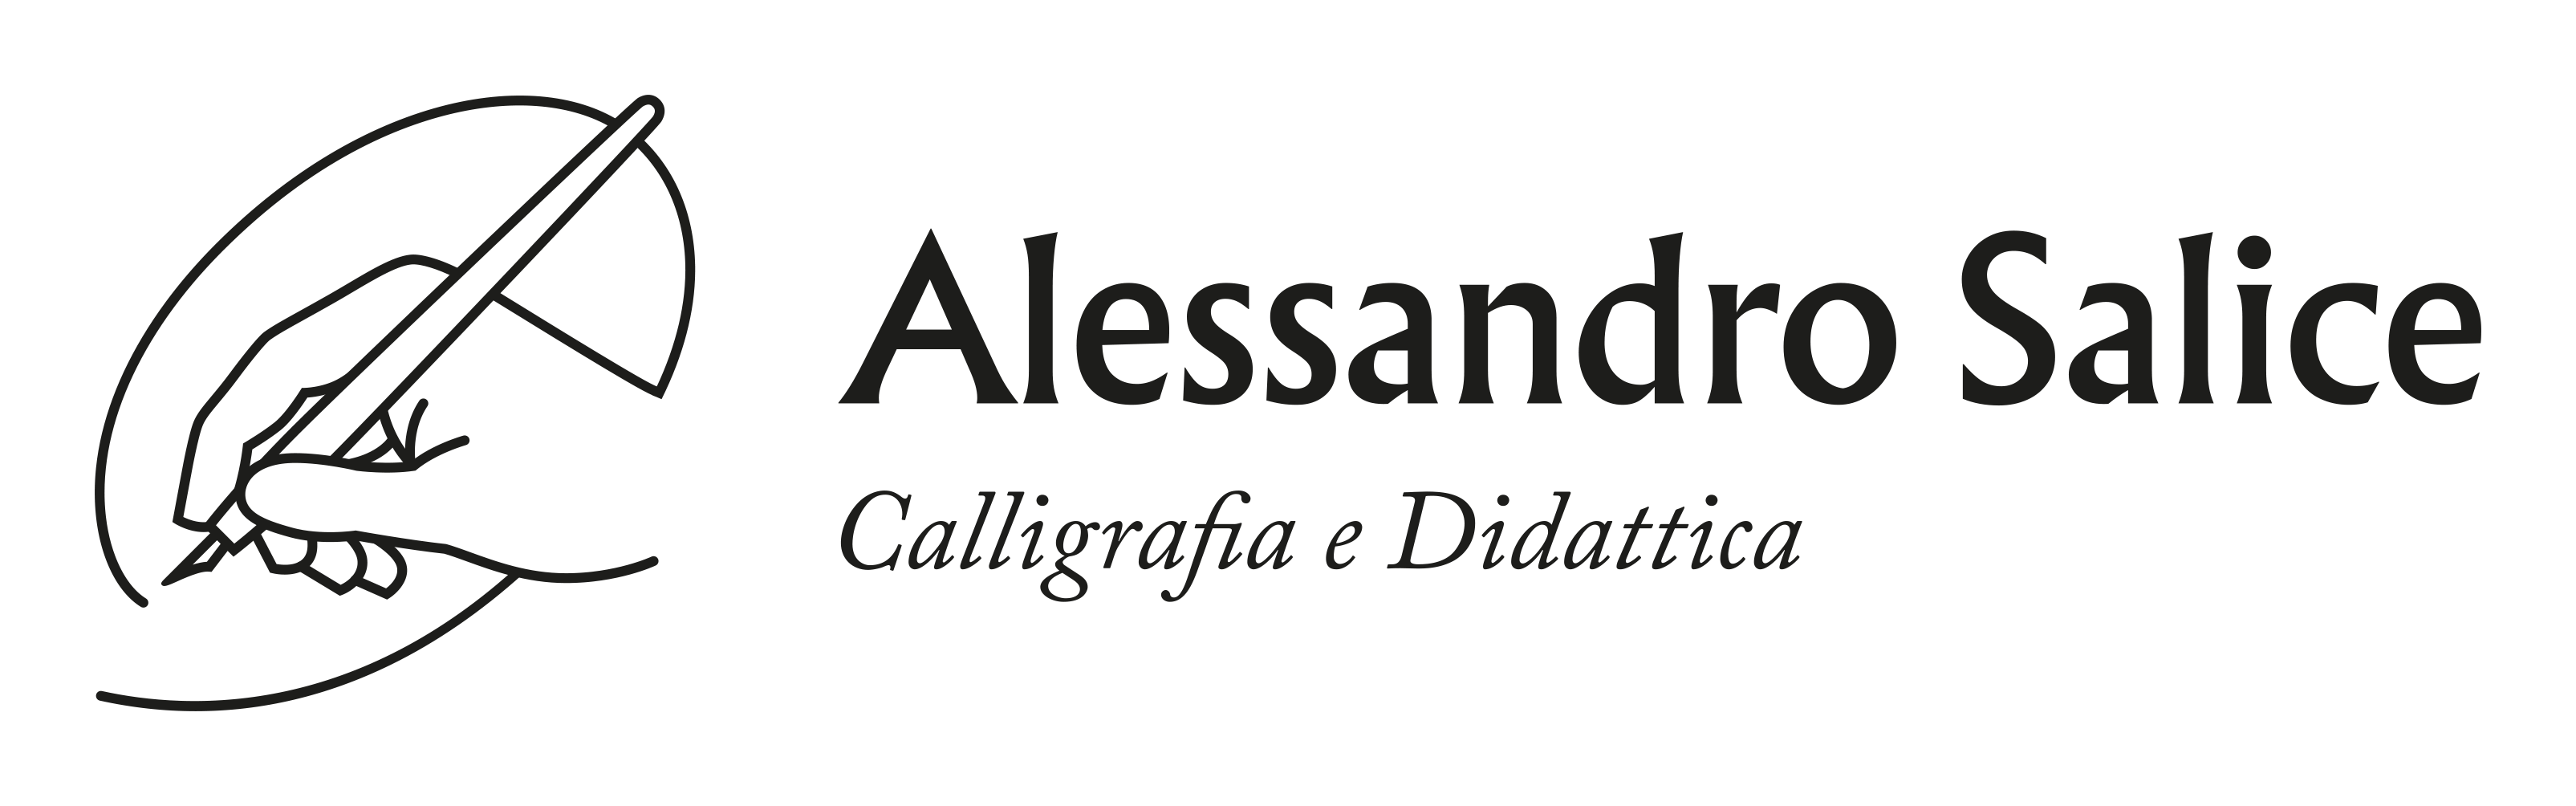 Alessandro Salice